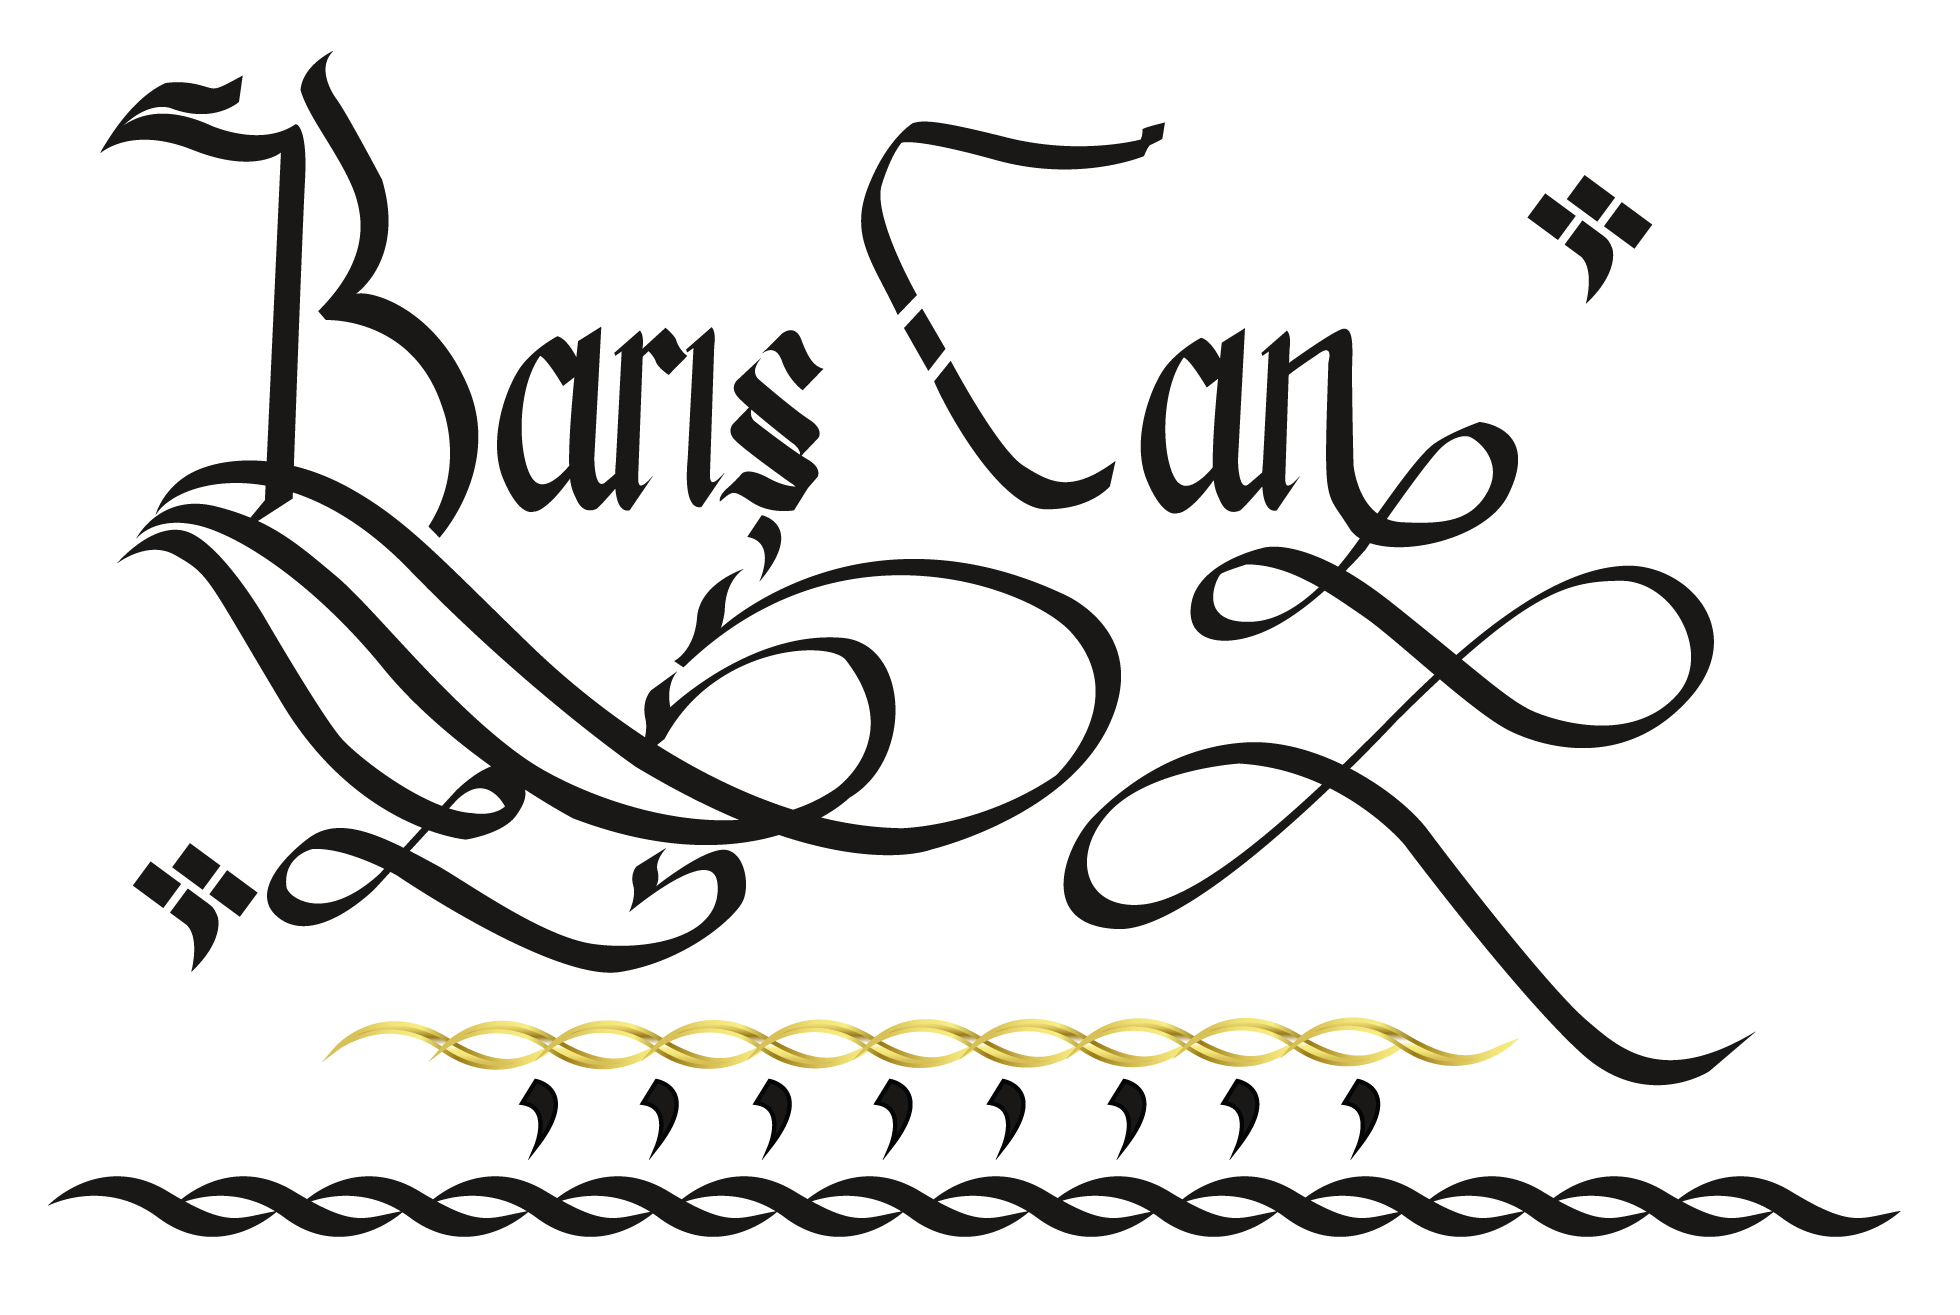 BarisCan